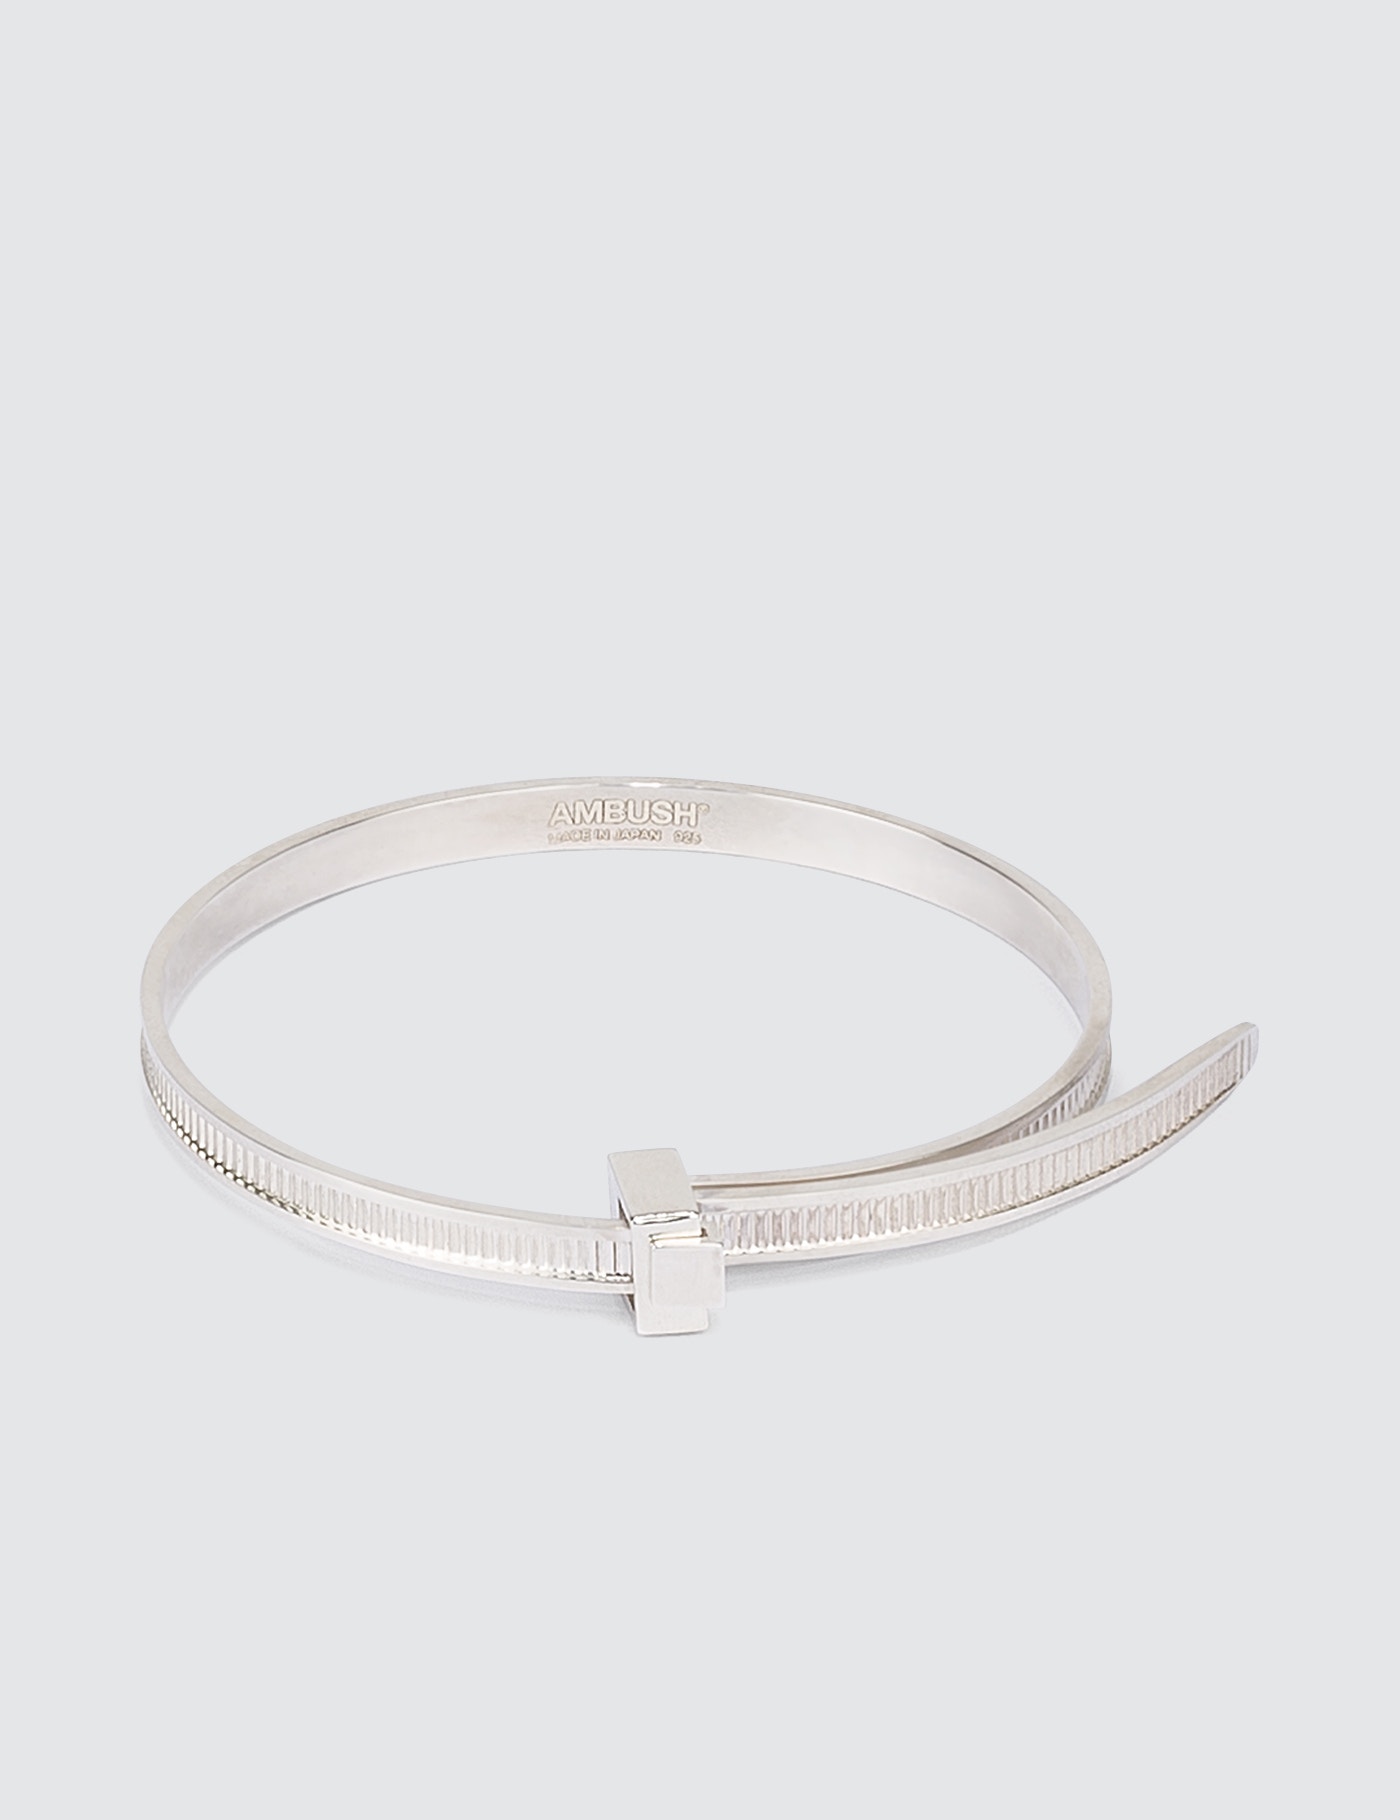 Very Goods | AMBUSH - SSS Zip Tie Bracelet | HBX